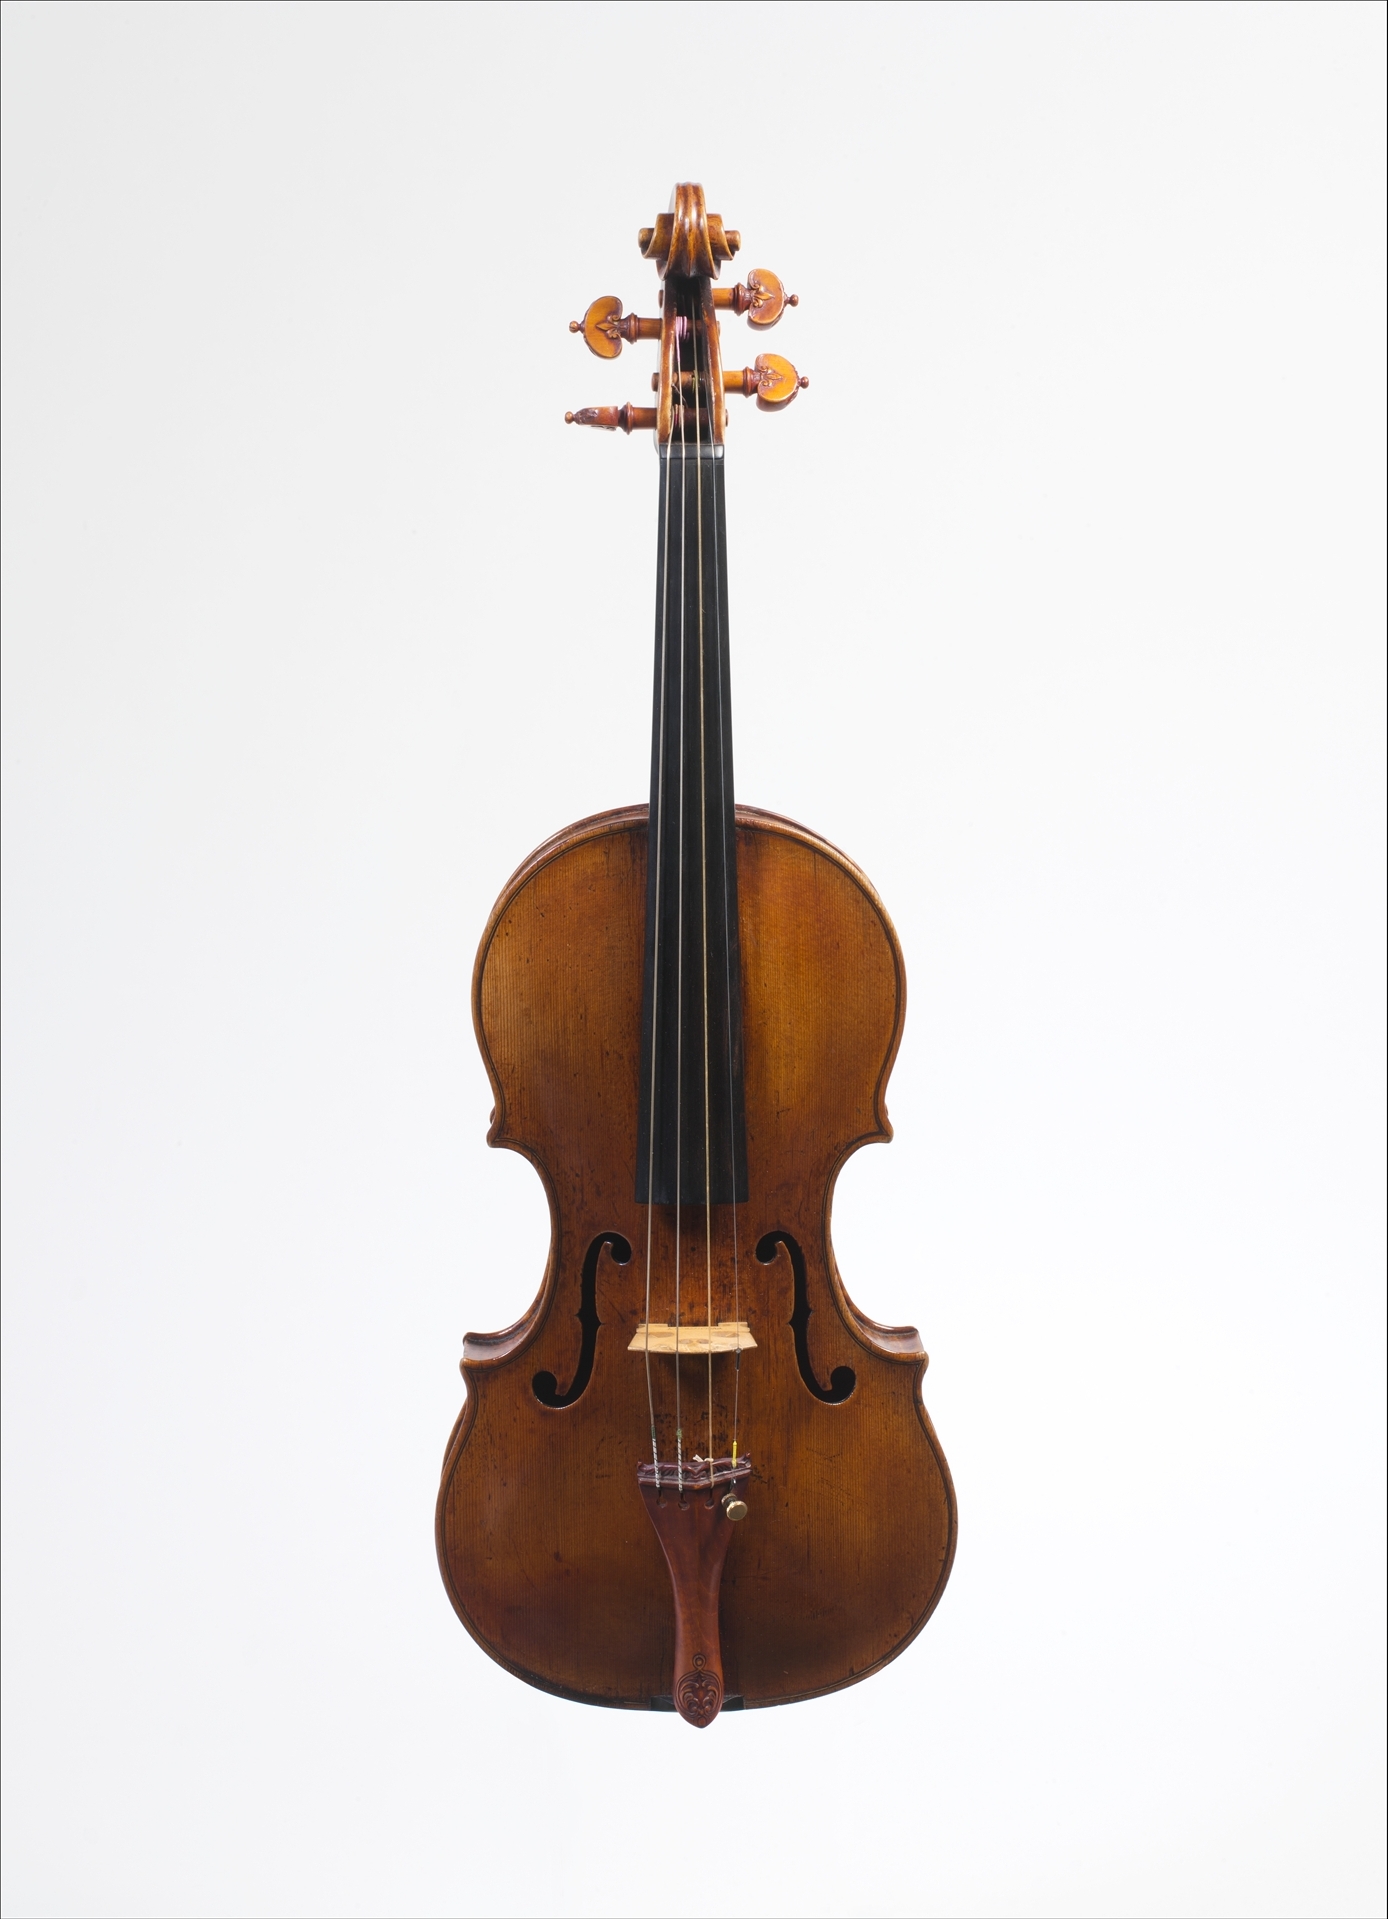 ex "Kurtz" Violine by Andrea Amati - ca. 1560 - 57.4 x 20.2 cm Metropolitan Museum of Art